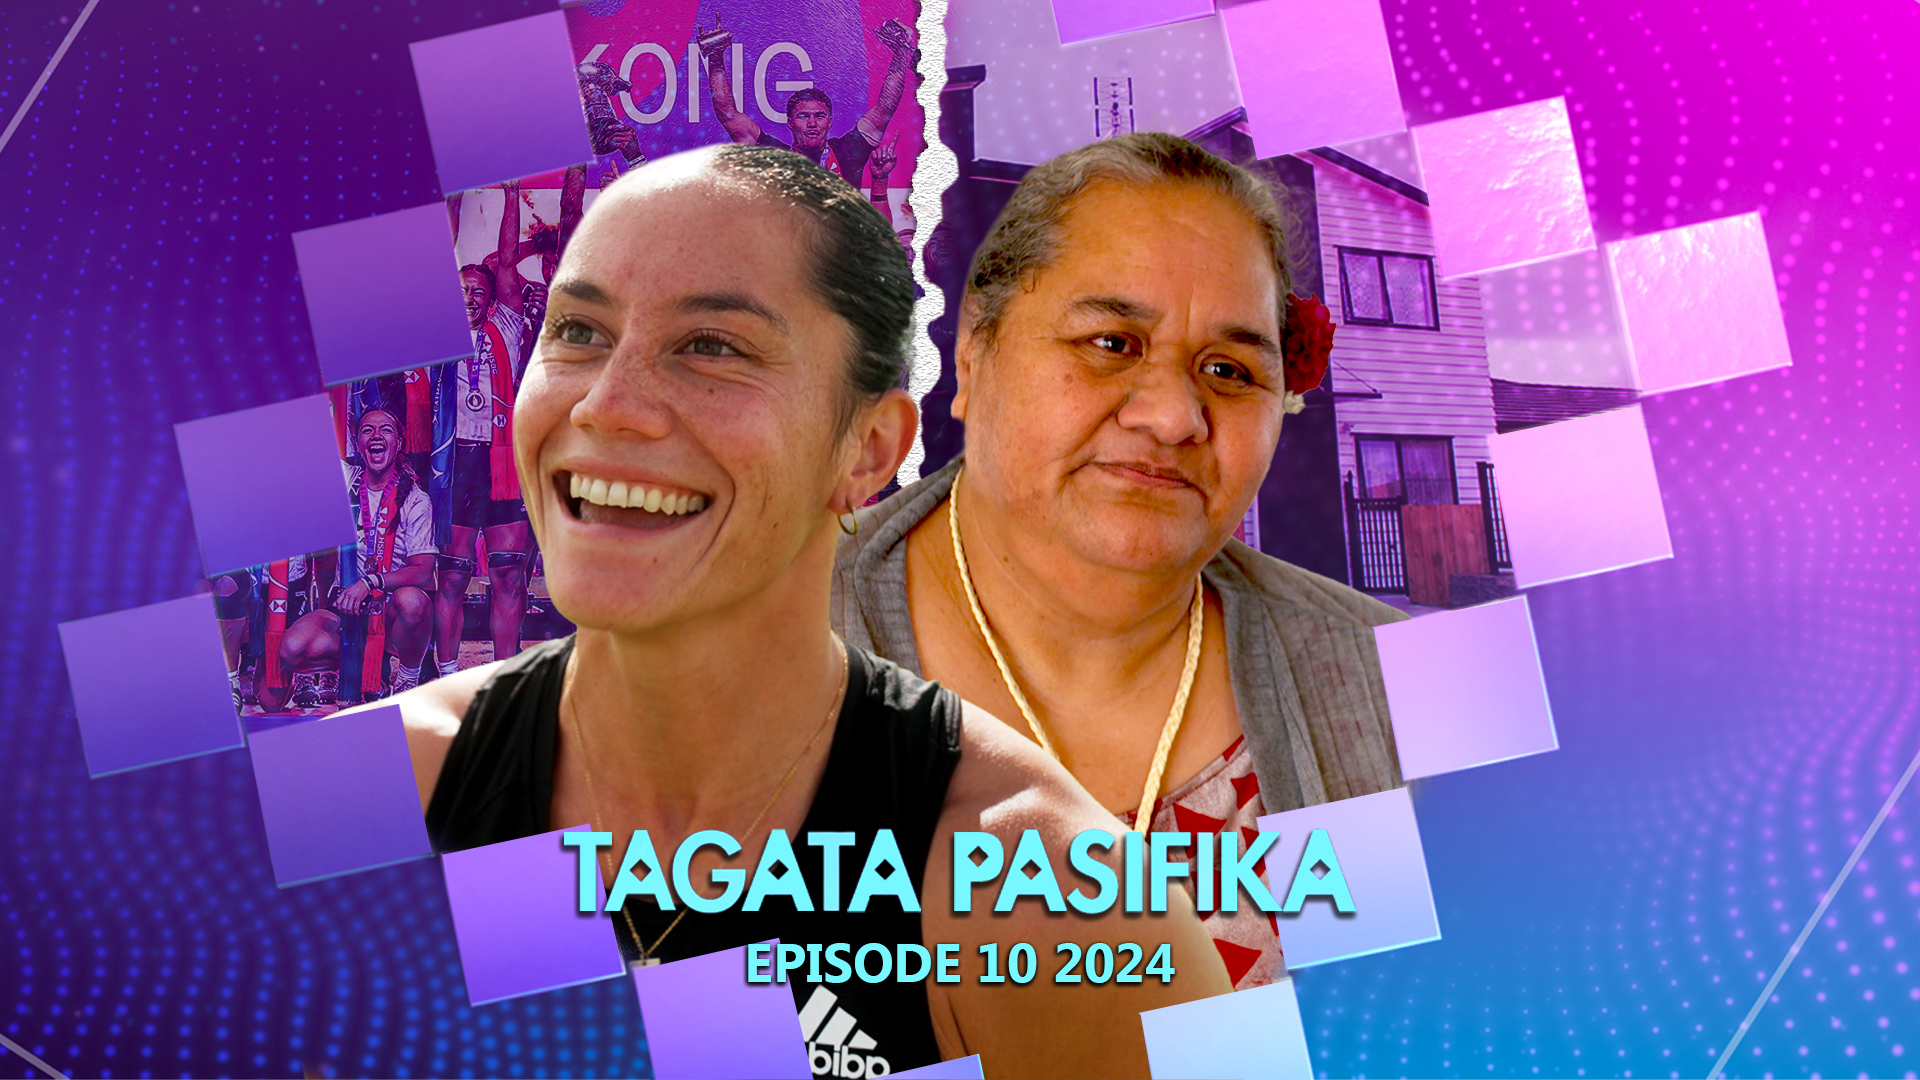 WATCH: Tagata Pasifika 2024 Episode 10